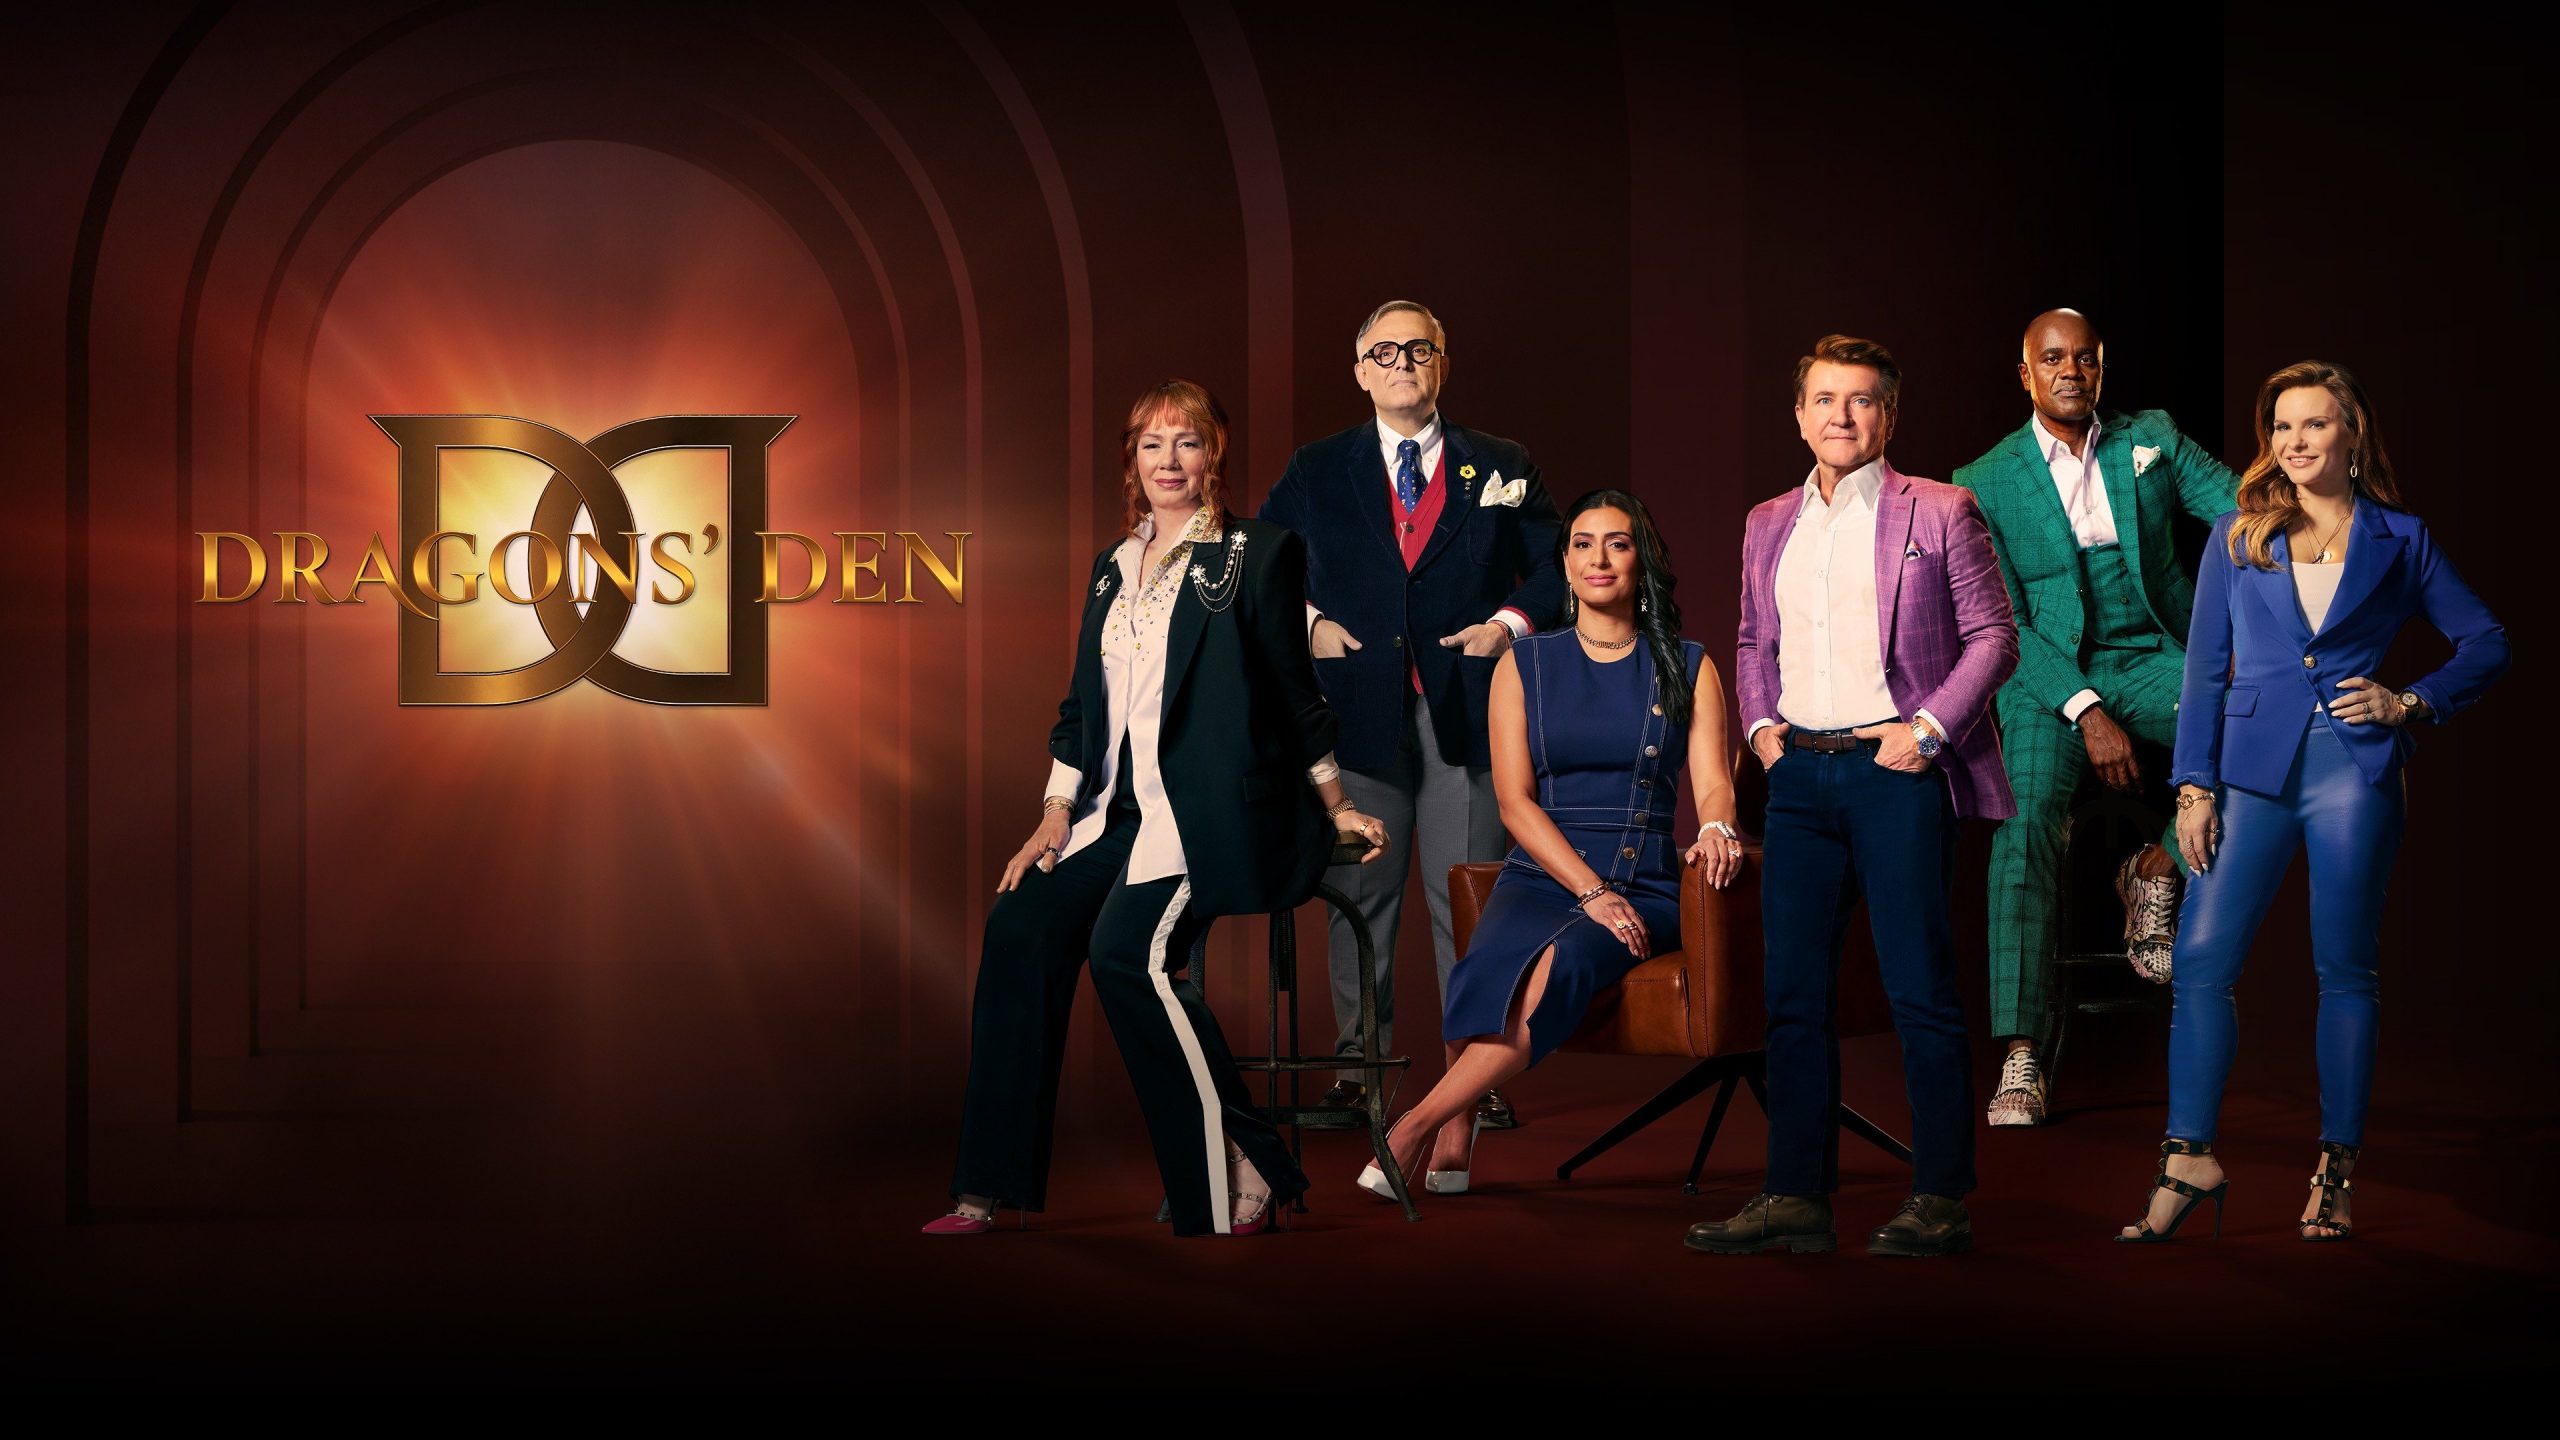 Dragons' Den Season 17 Episode 9: Release Date, Spoiler & Streaming Guide